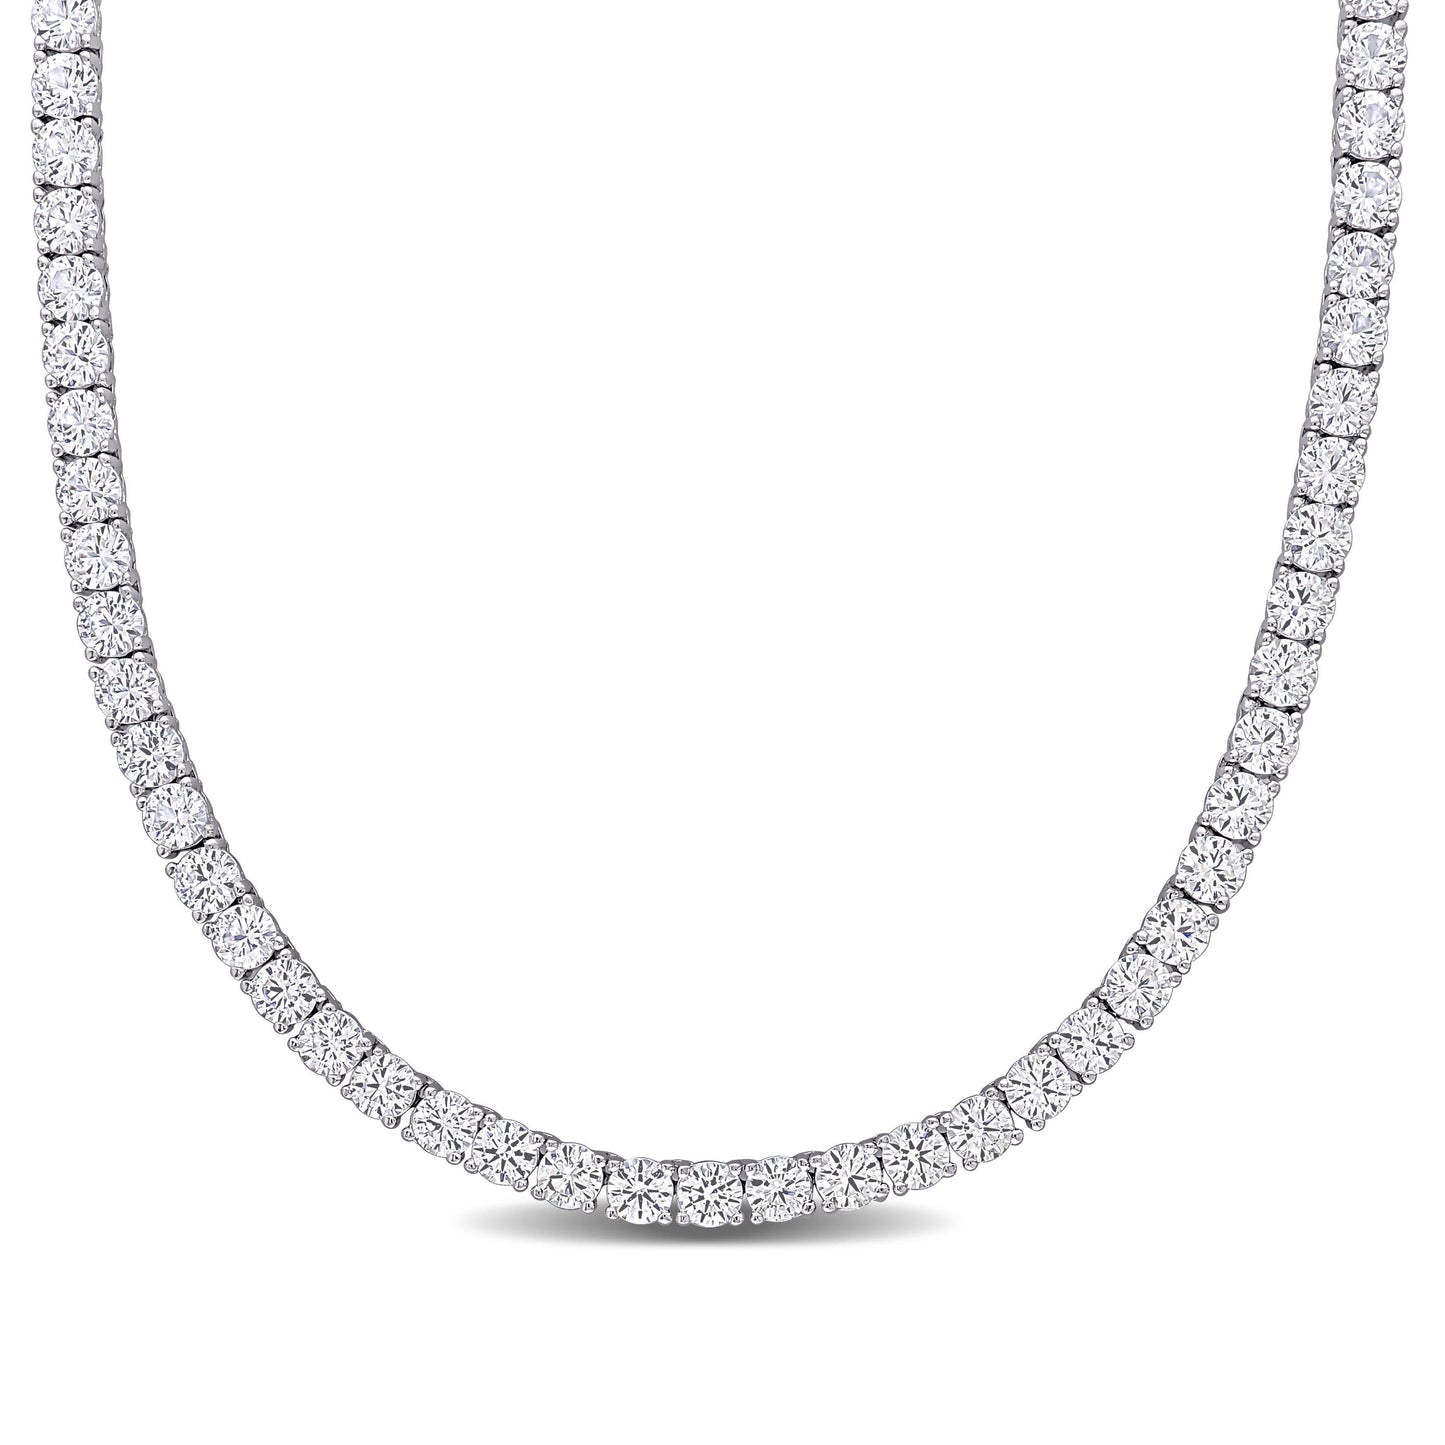 33ct White Sapphire Tennis Necklace